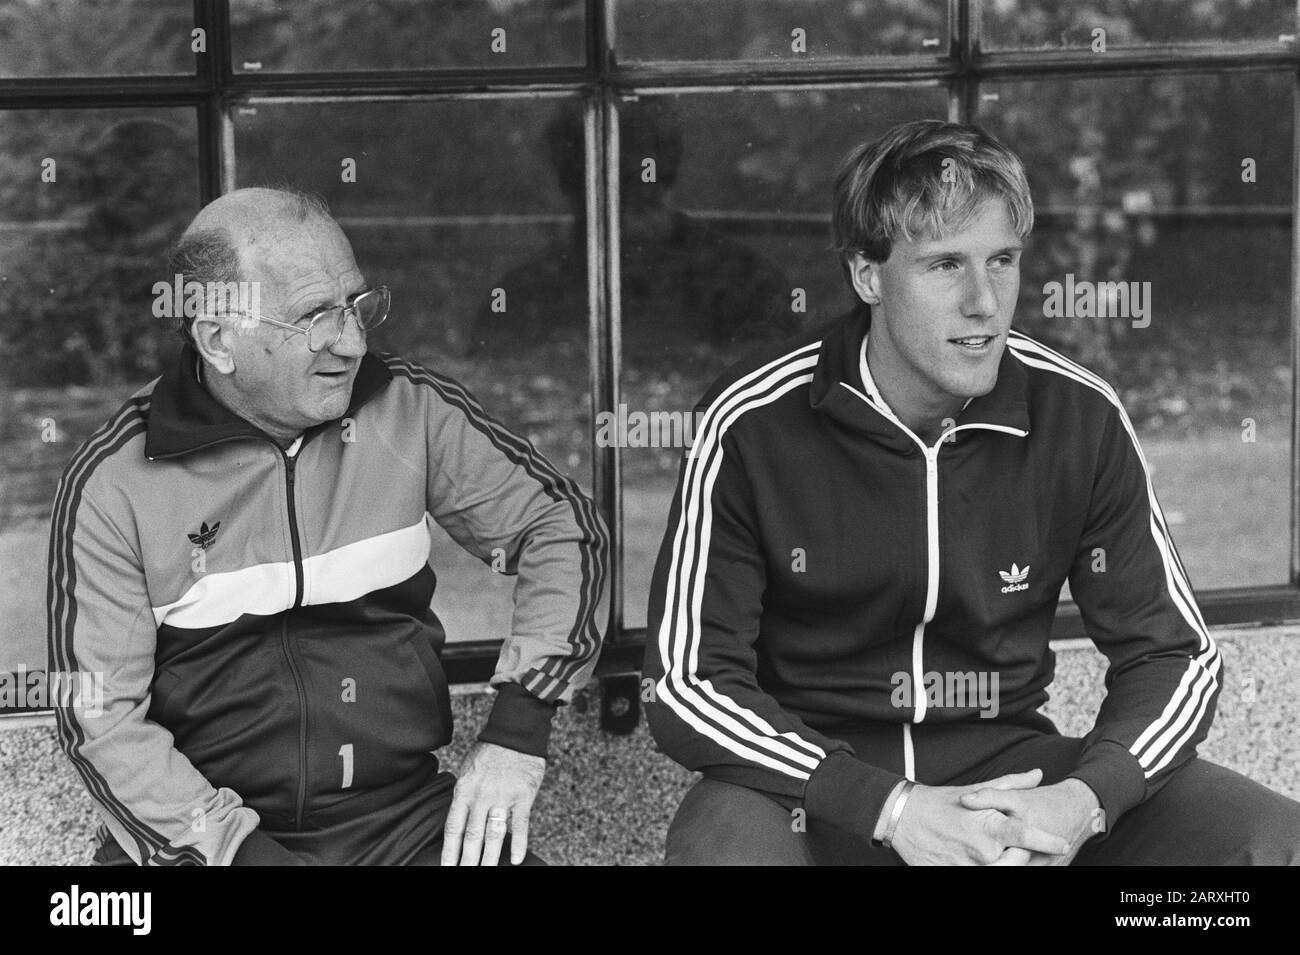 Training Dutch team in Zeist; Cees Rijvers and goalkeeper Van Breukelen (r) Date: August 18, 1982 Location: Utrecht, Zeist Keywords: goalkeepers, sport, football Stock Photo